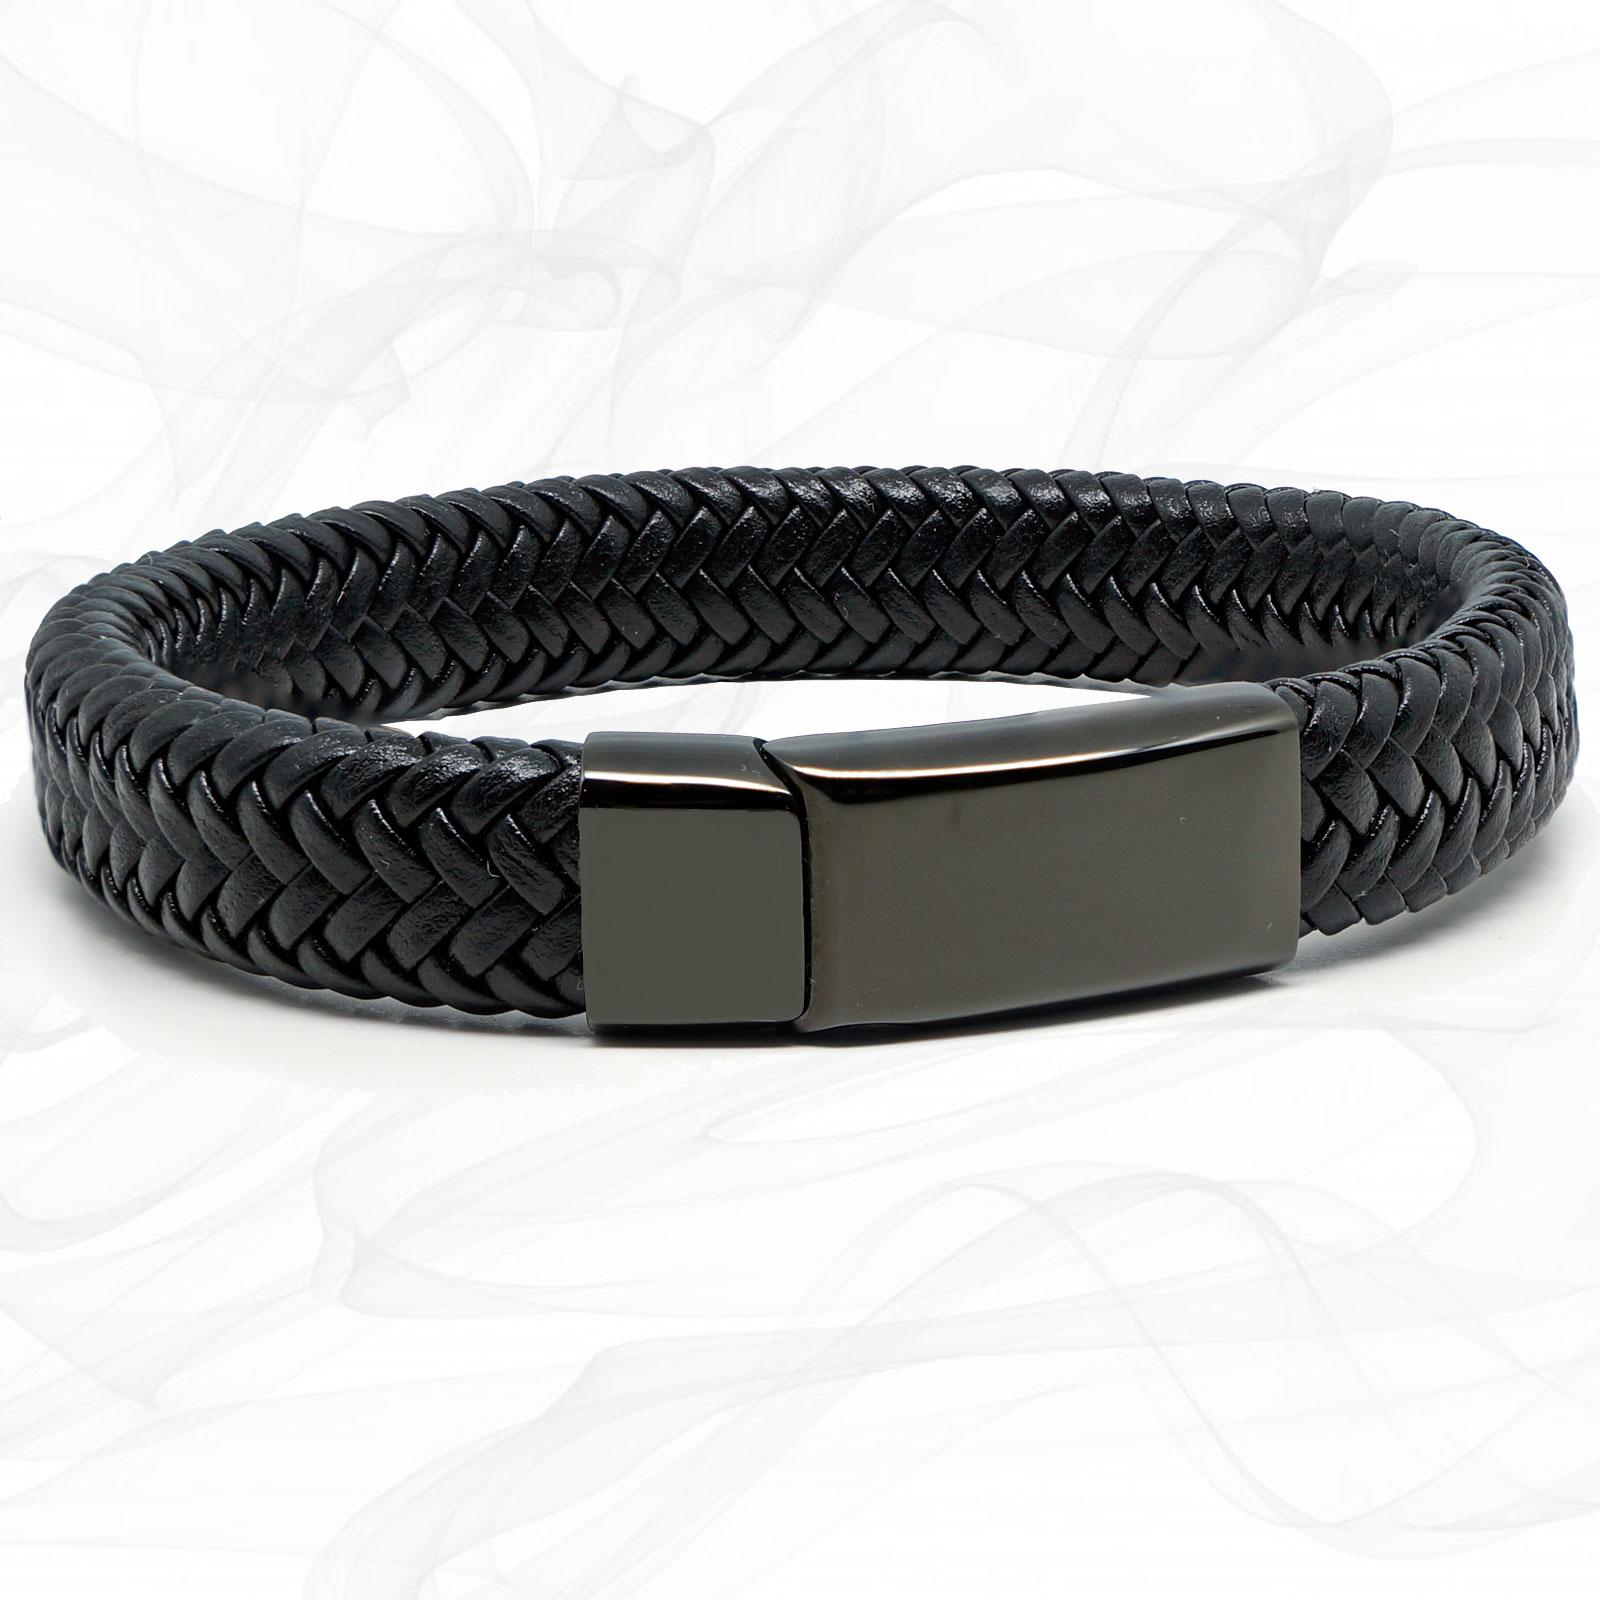 Wide All Black Super Soft Premium Leather Bracelet with a Black Sliding Magnetic Clasp.